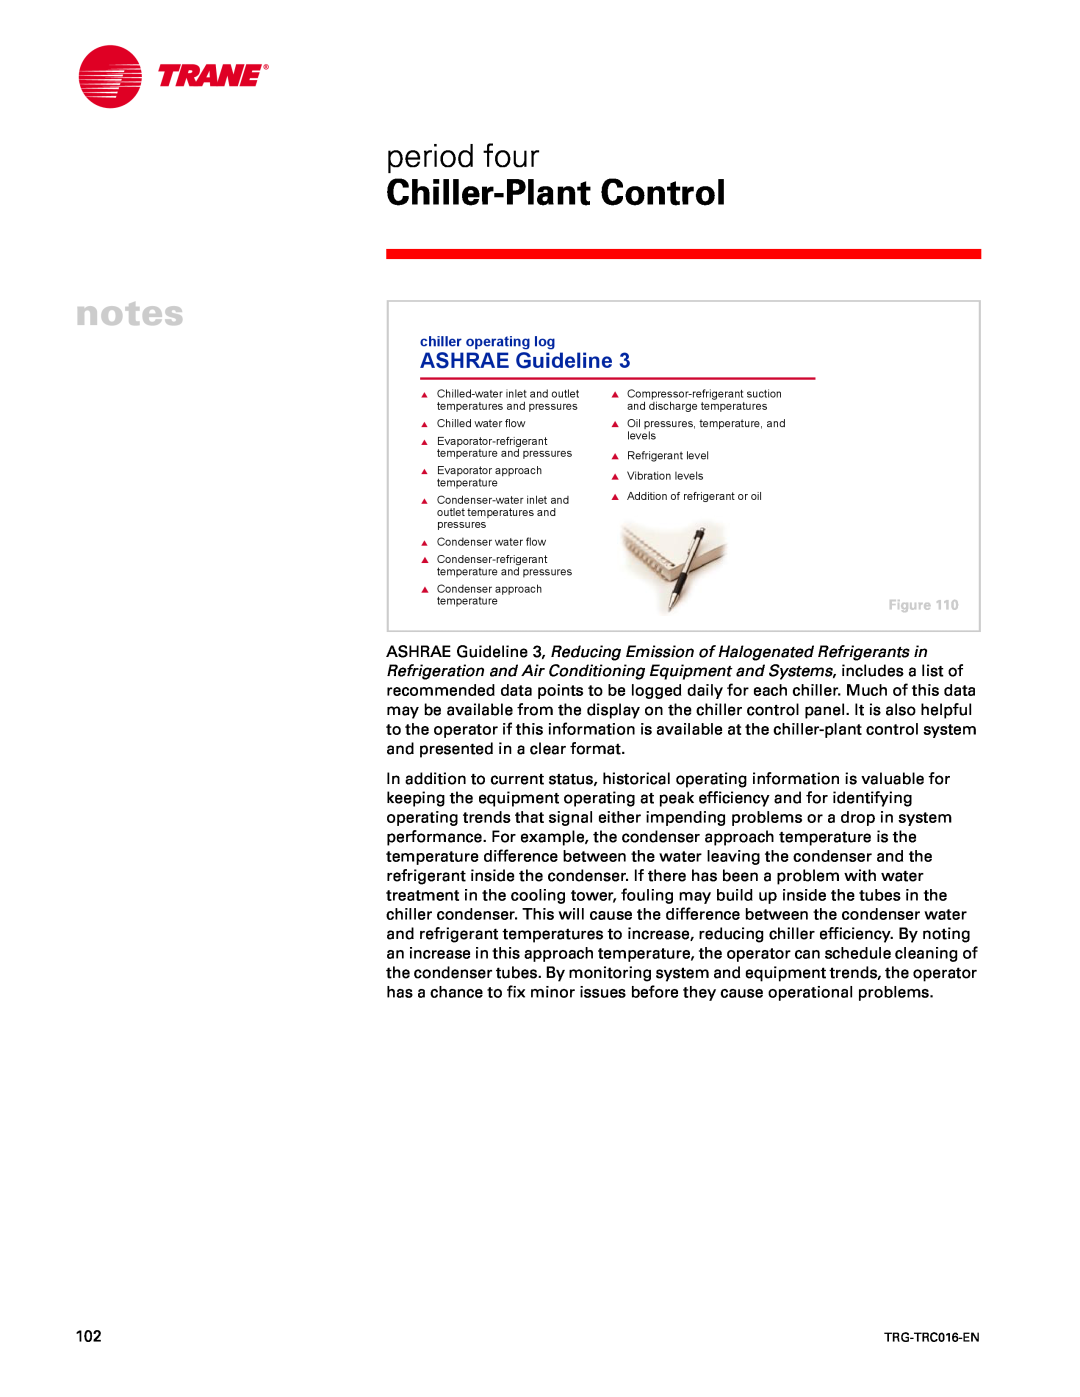 Trane TRG-TRC016-EN manual ASHRAE Guideline, notes, Chiller-PlantControl, period four, chiller operating log 